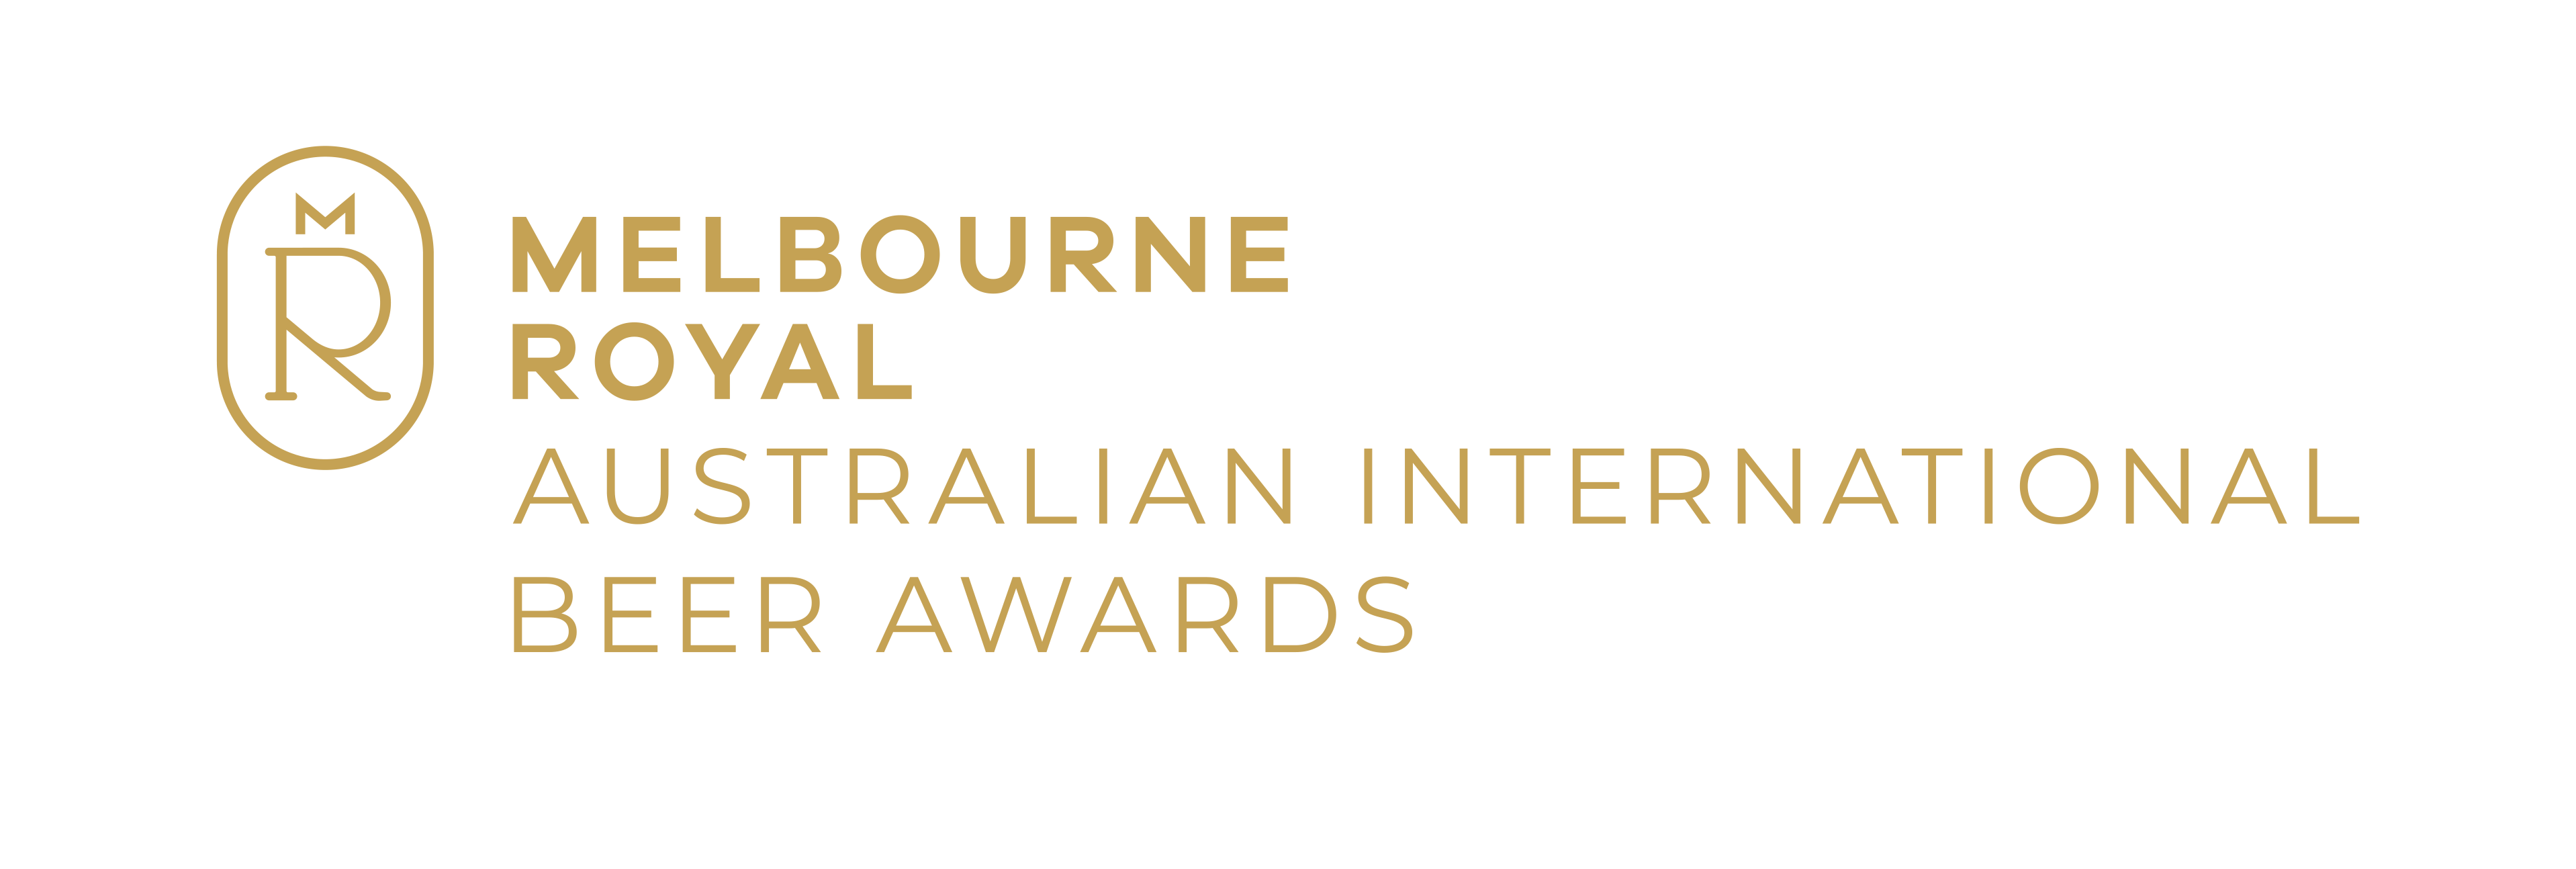 Australian International Beer Awards